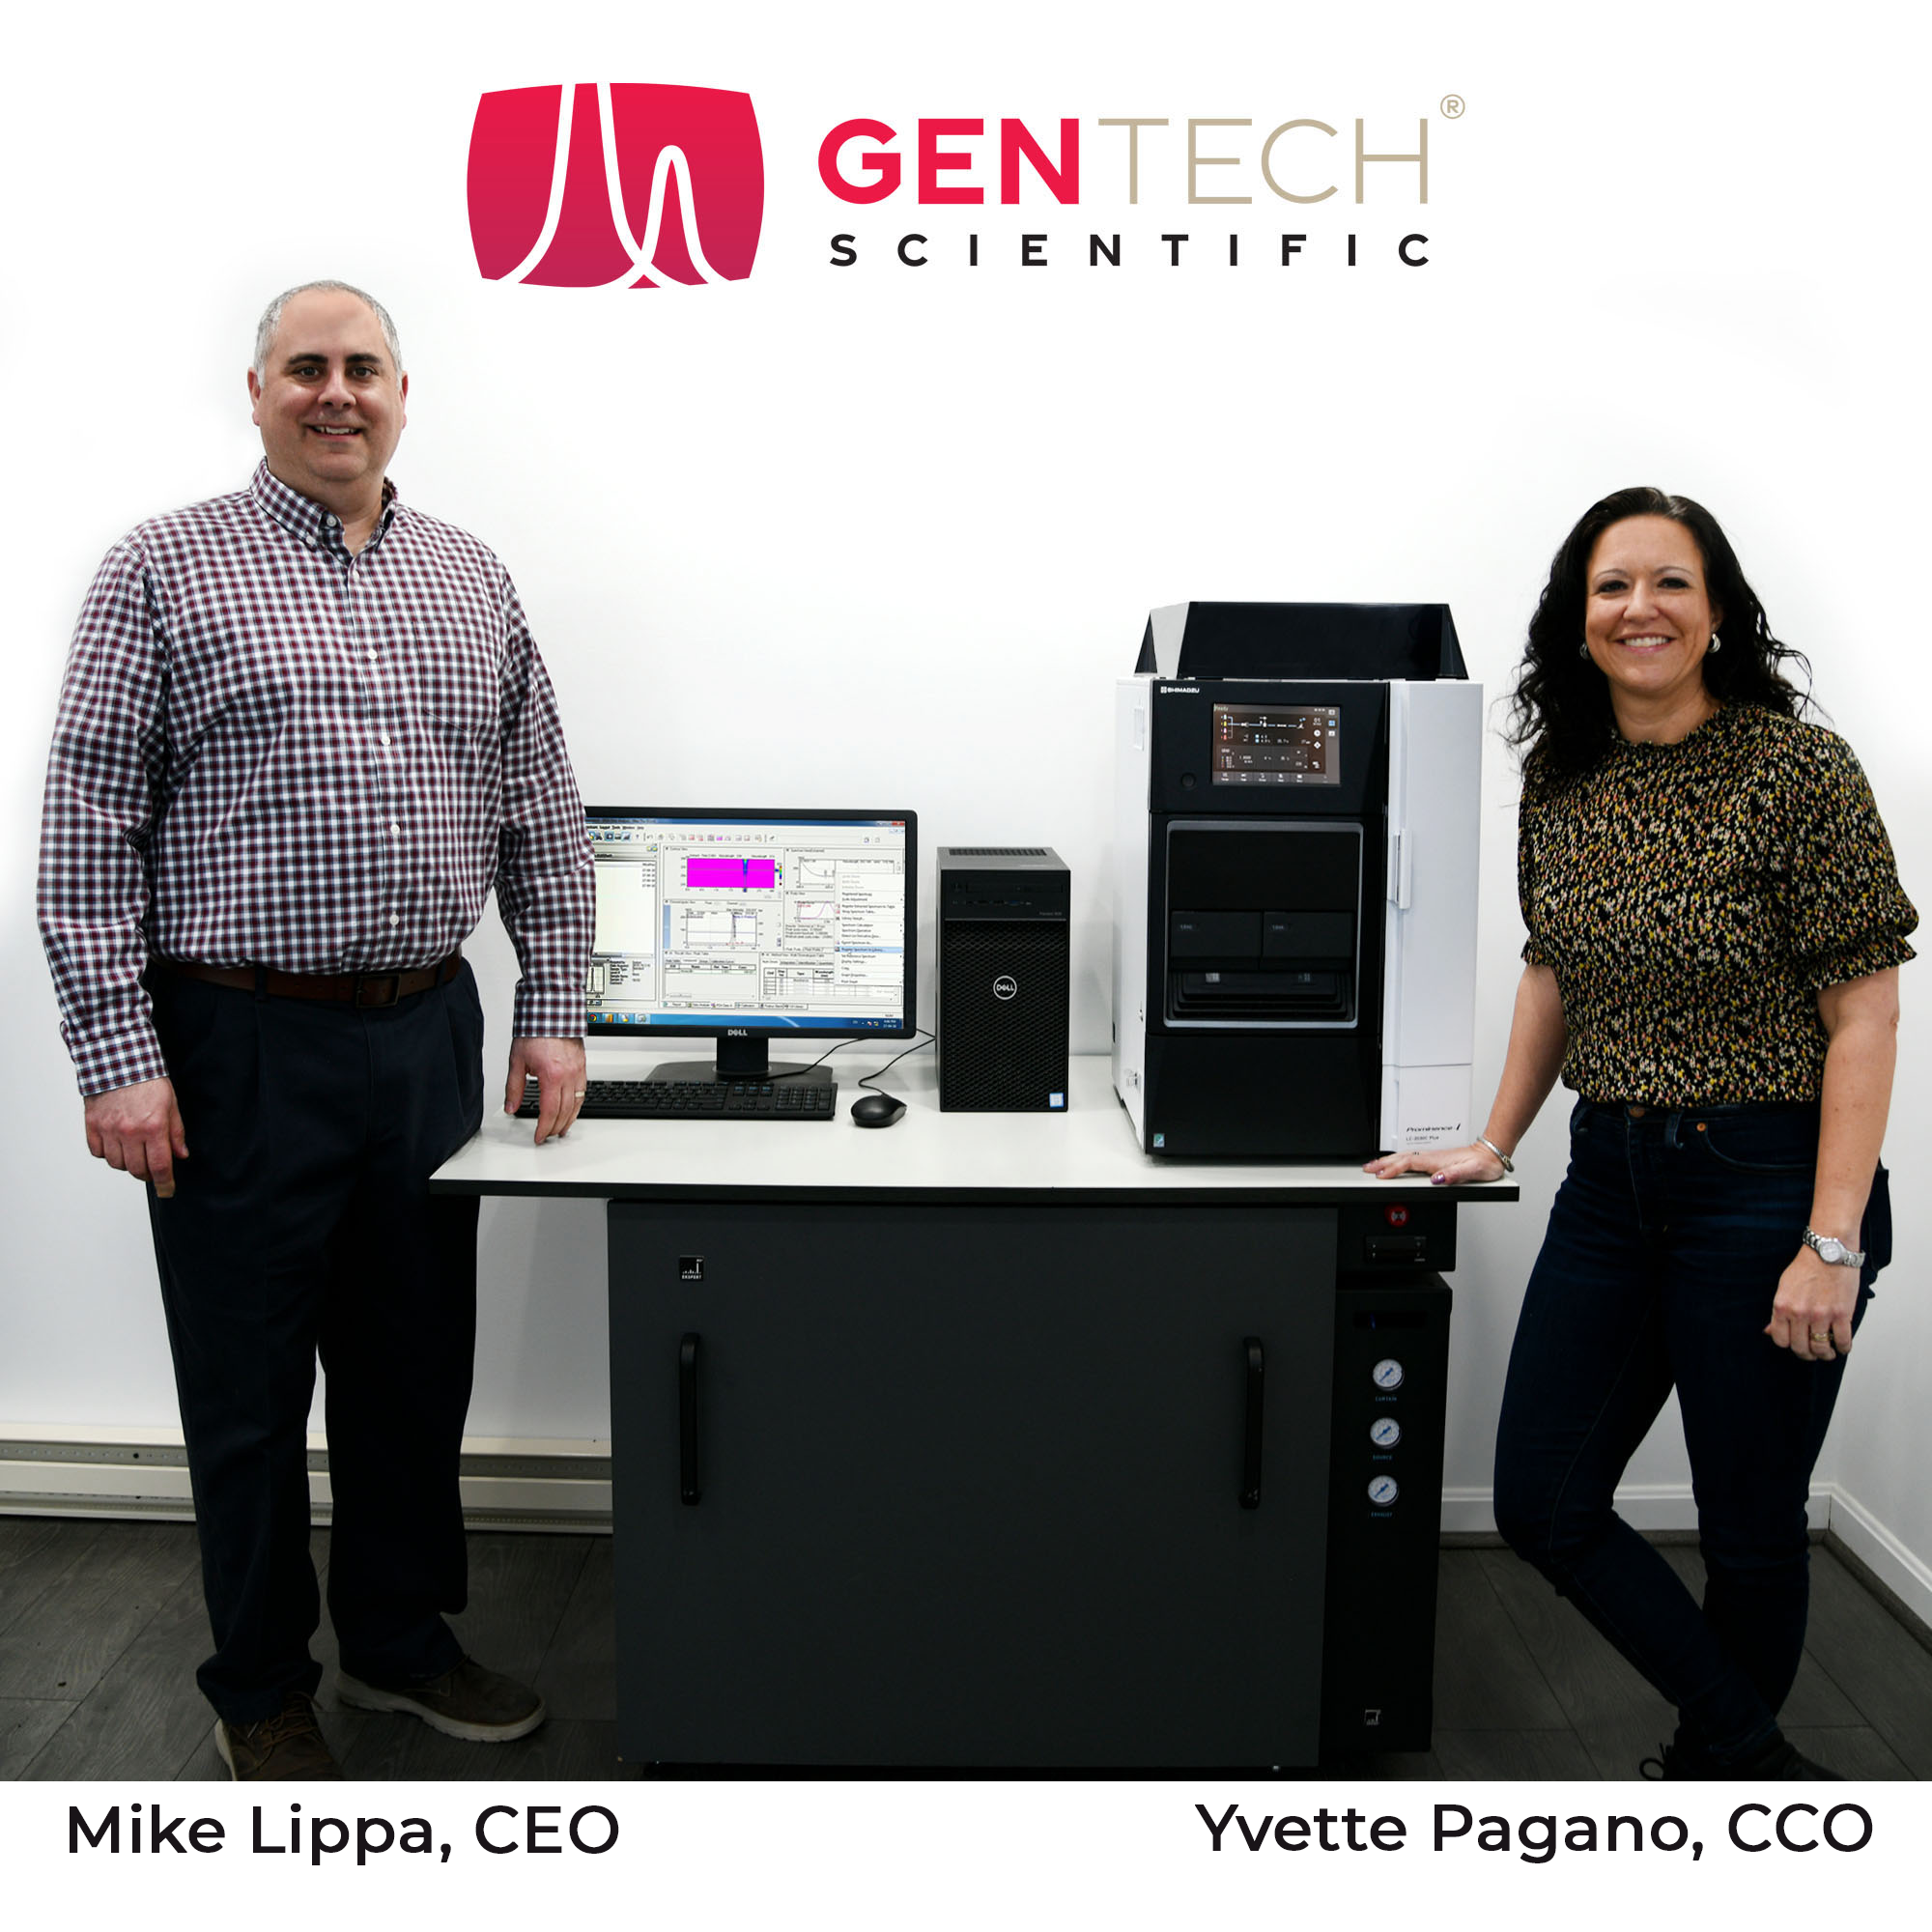 CEO Mike Lippa and Yvette Pagano, CCO